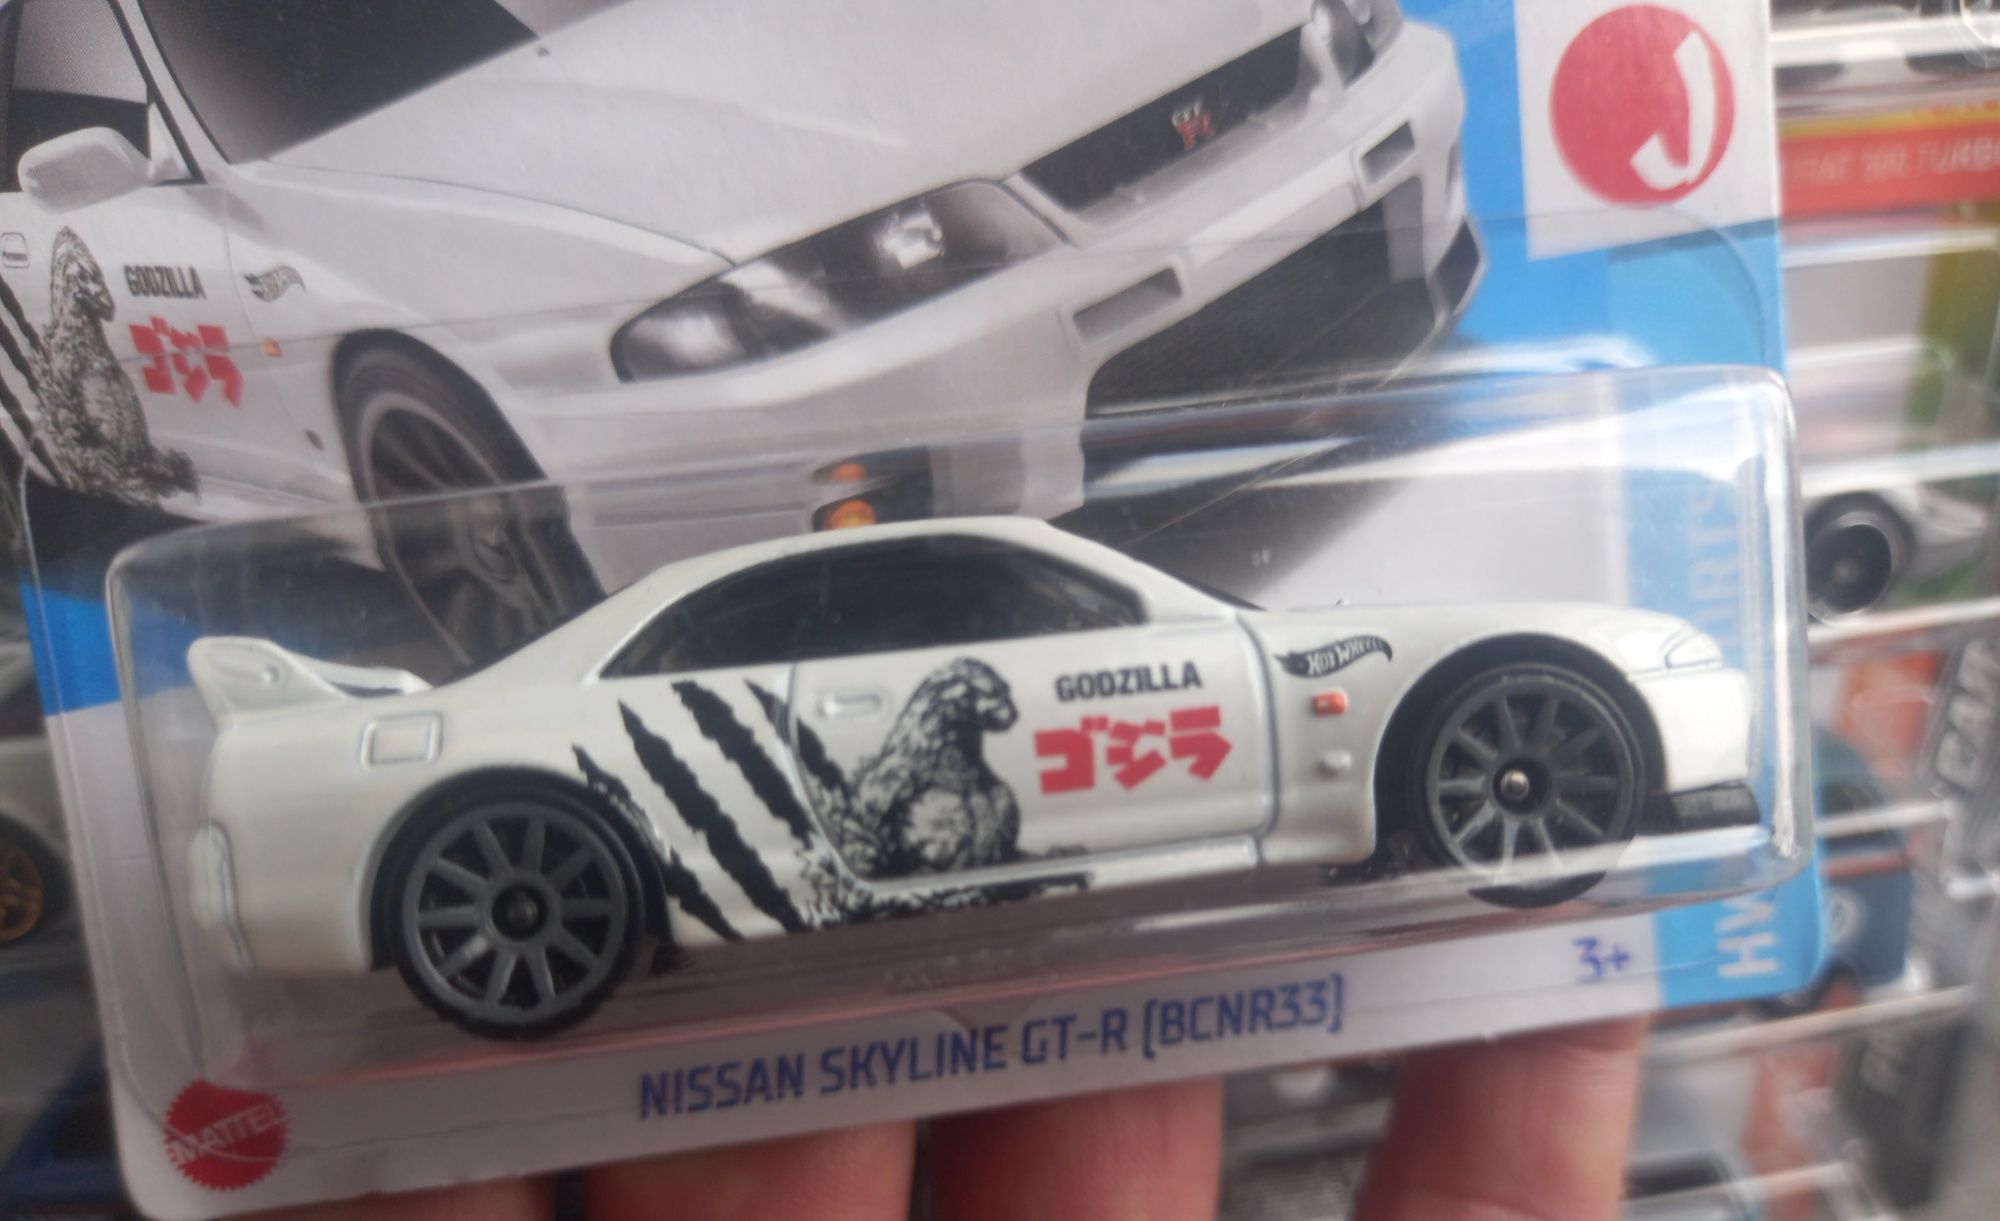 Nissan skyline GT-R